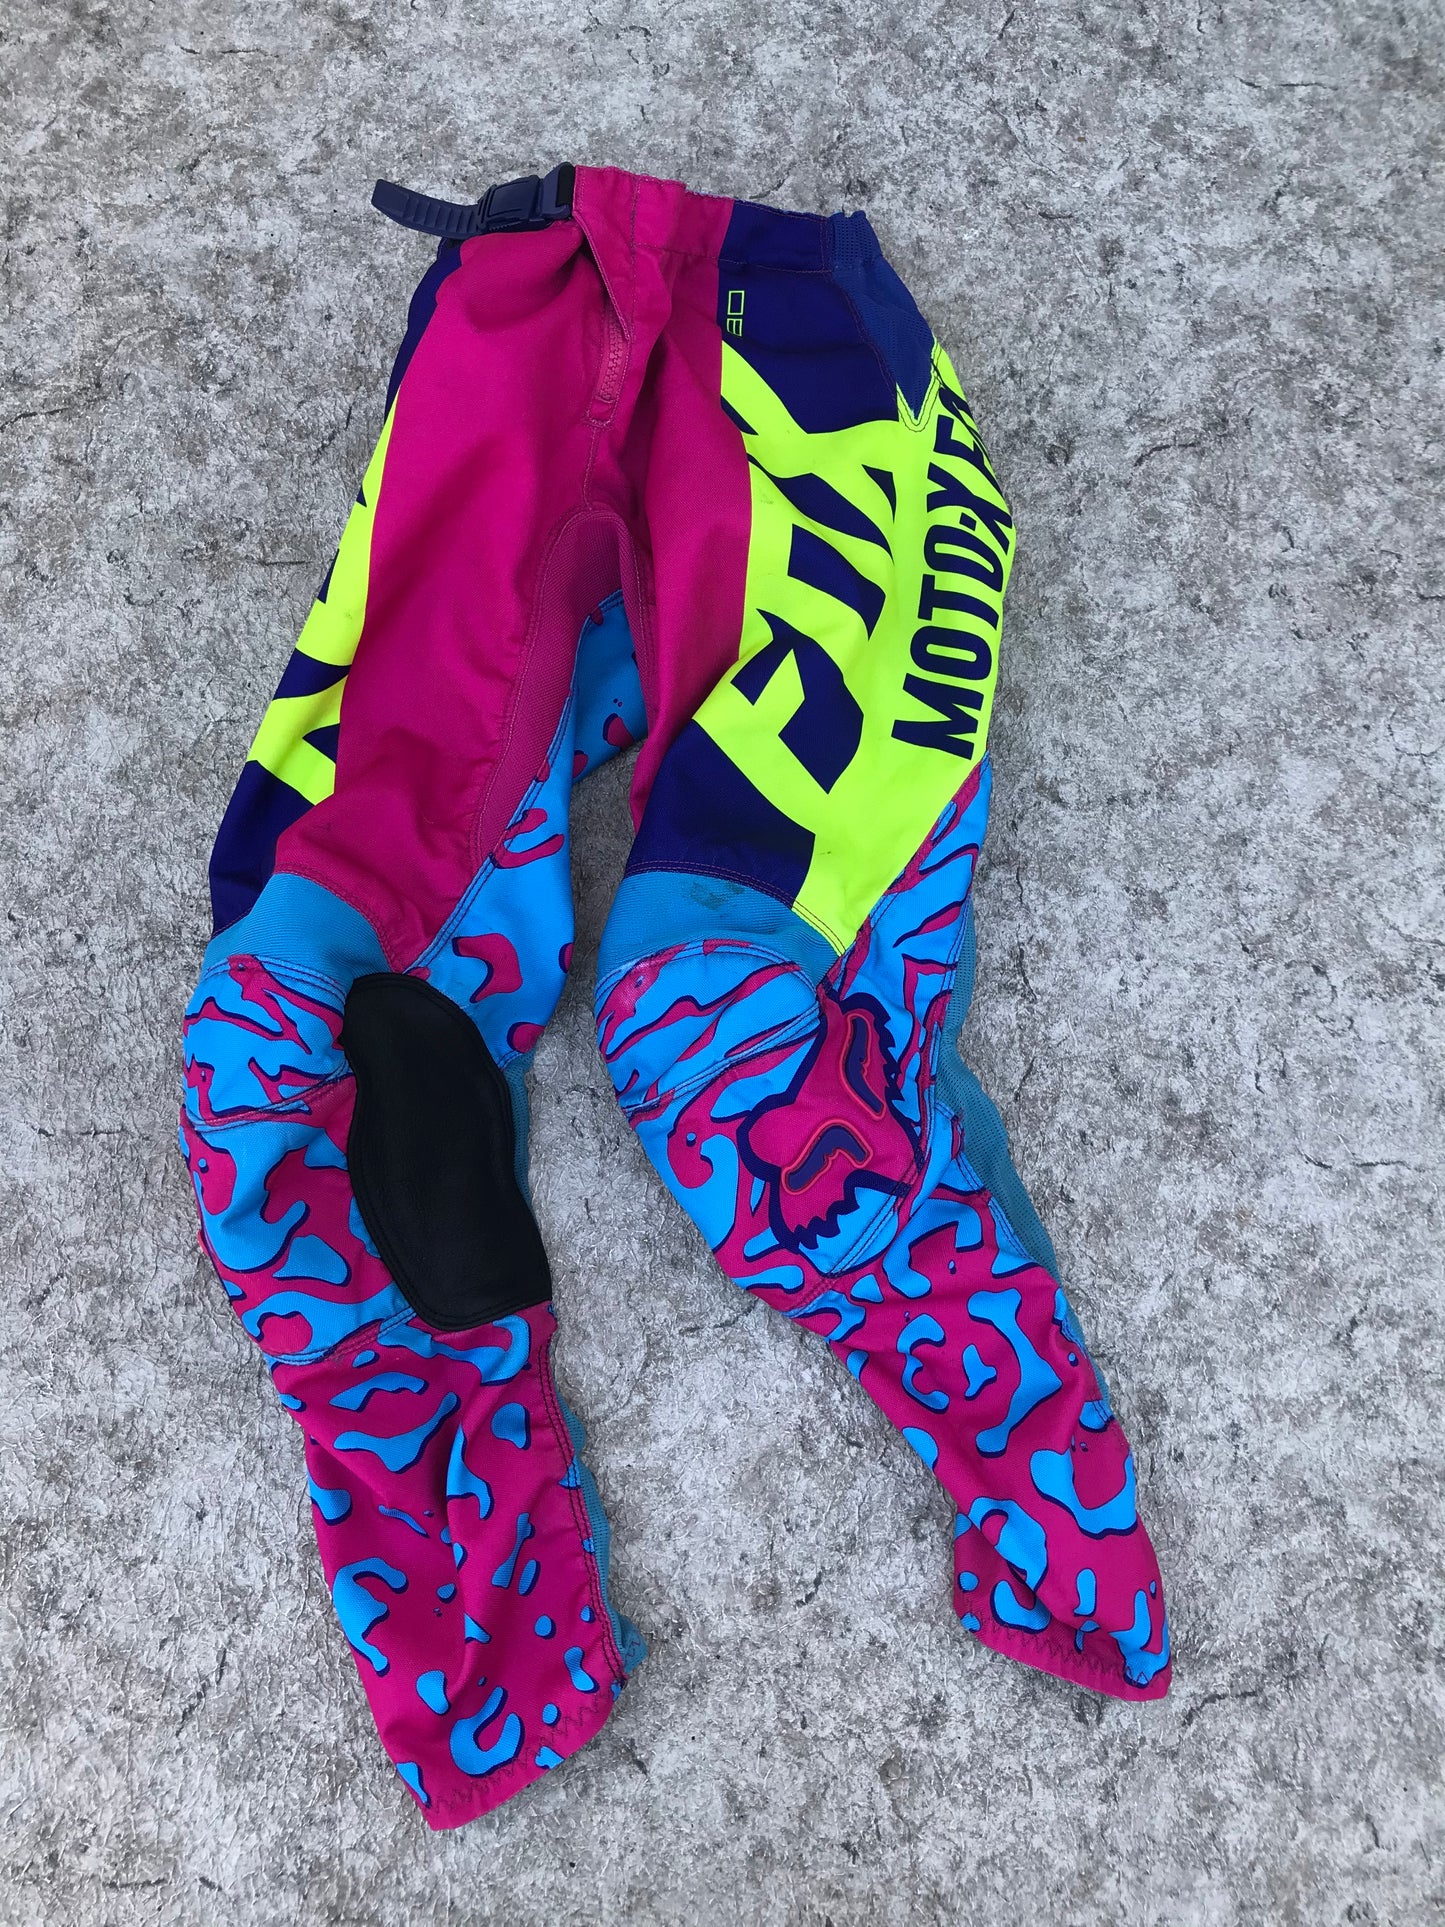 Motocross BMX Dirt Bike Pants  Child Size 24 inch Size 8-10 Fox Pink Multi Minor Marks